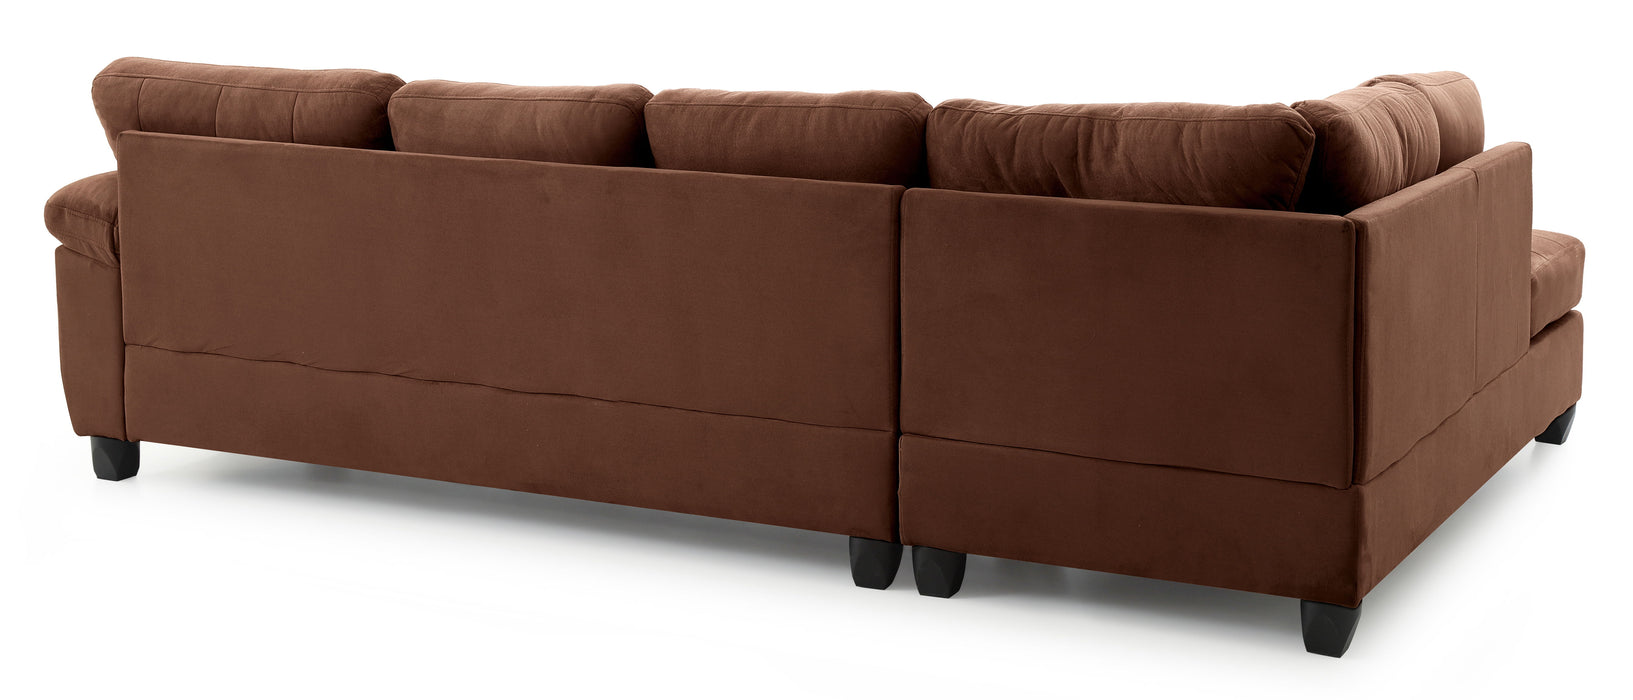 Glory Furniture - Glory Furniture Gallant Sectional, Chocolate Microfiber